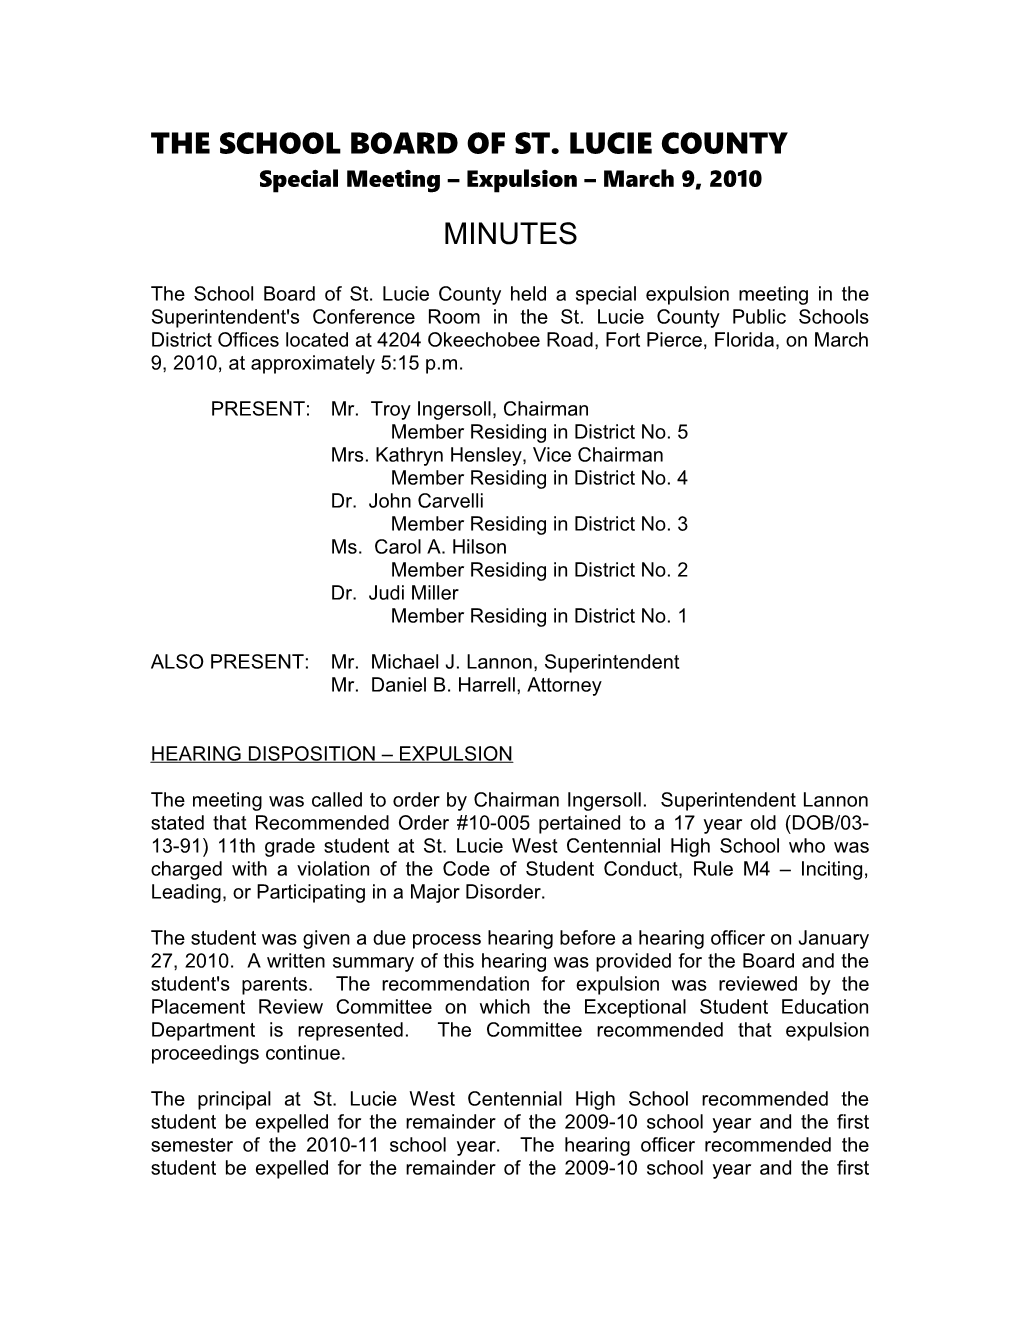 03-09-10 SLCSB Special (Expulsion) Meeting Minutes